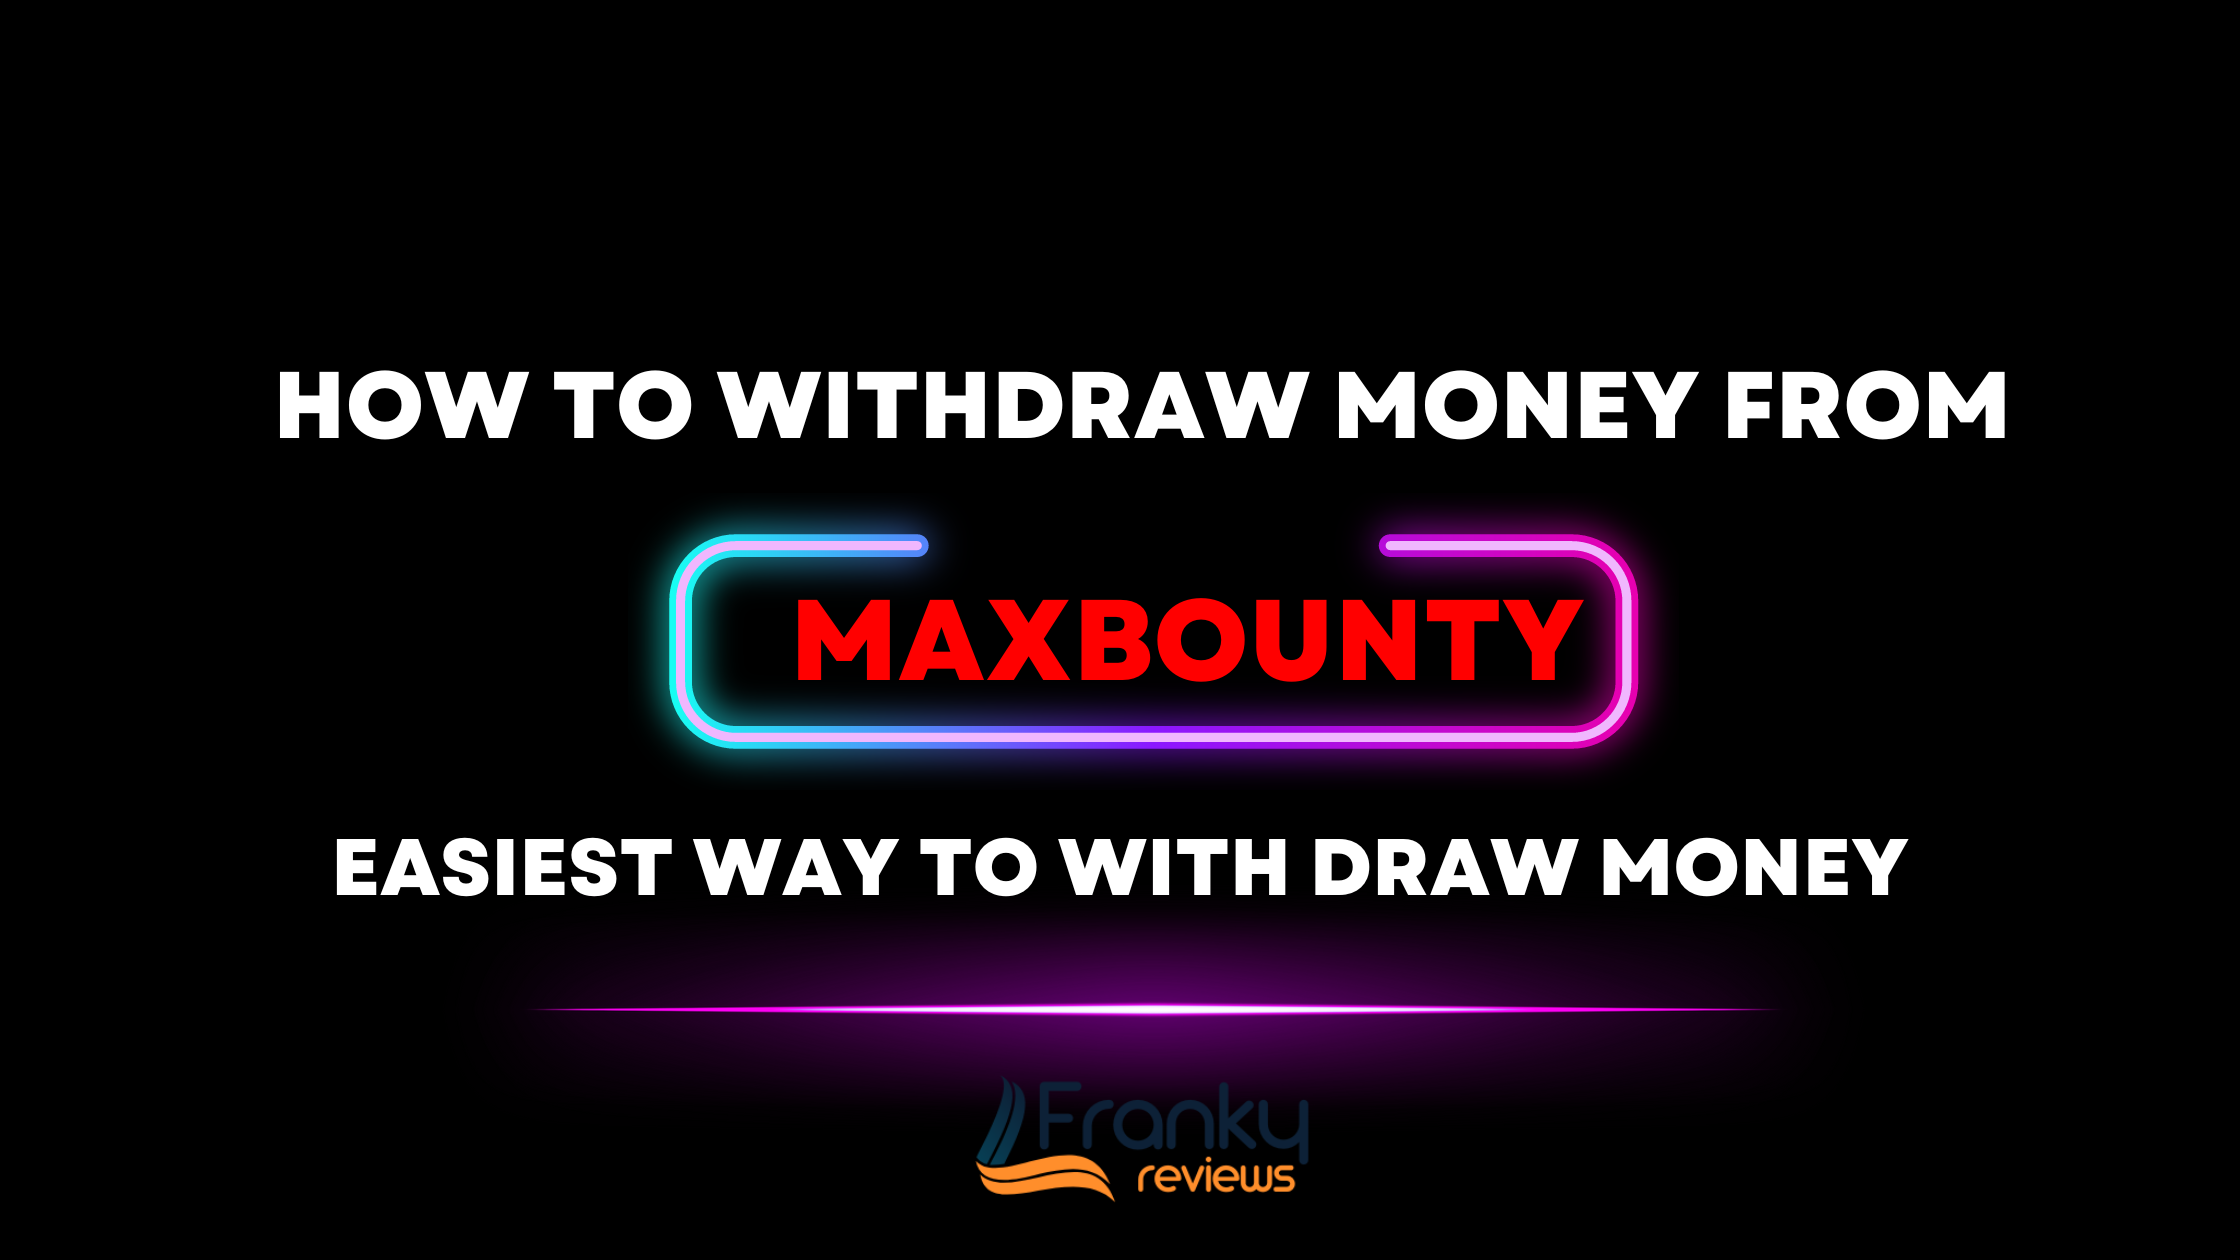 WITHDRAW MONEY FROM MAXBOUNTY